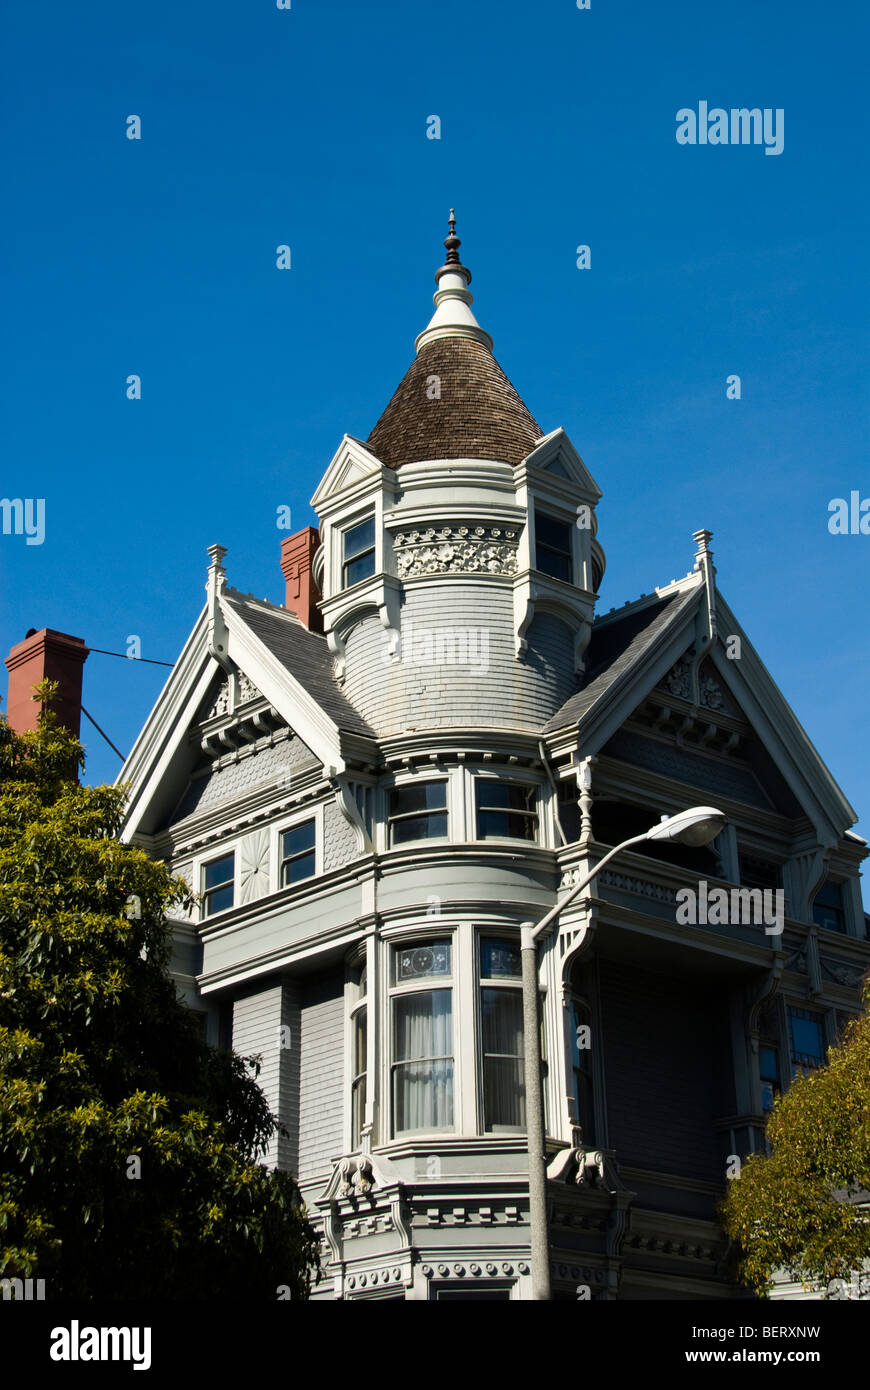 Californie : San Francisco. Haas-Lilienthal house victorienne. Photo copyright Lee Foster. Photo #  : 22-casanf77470 Banque D'Images